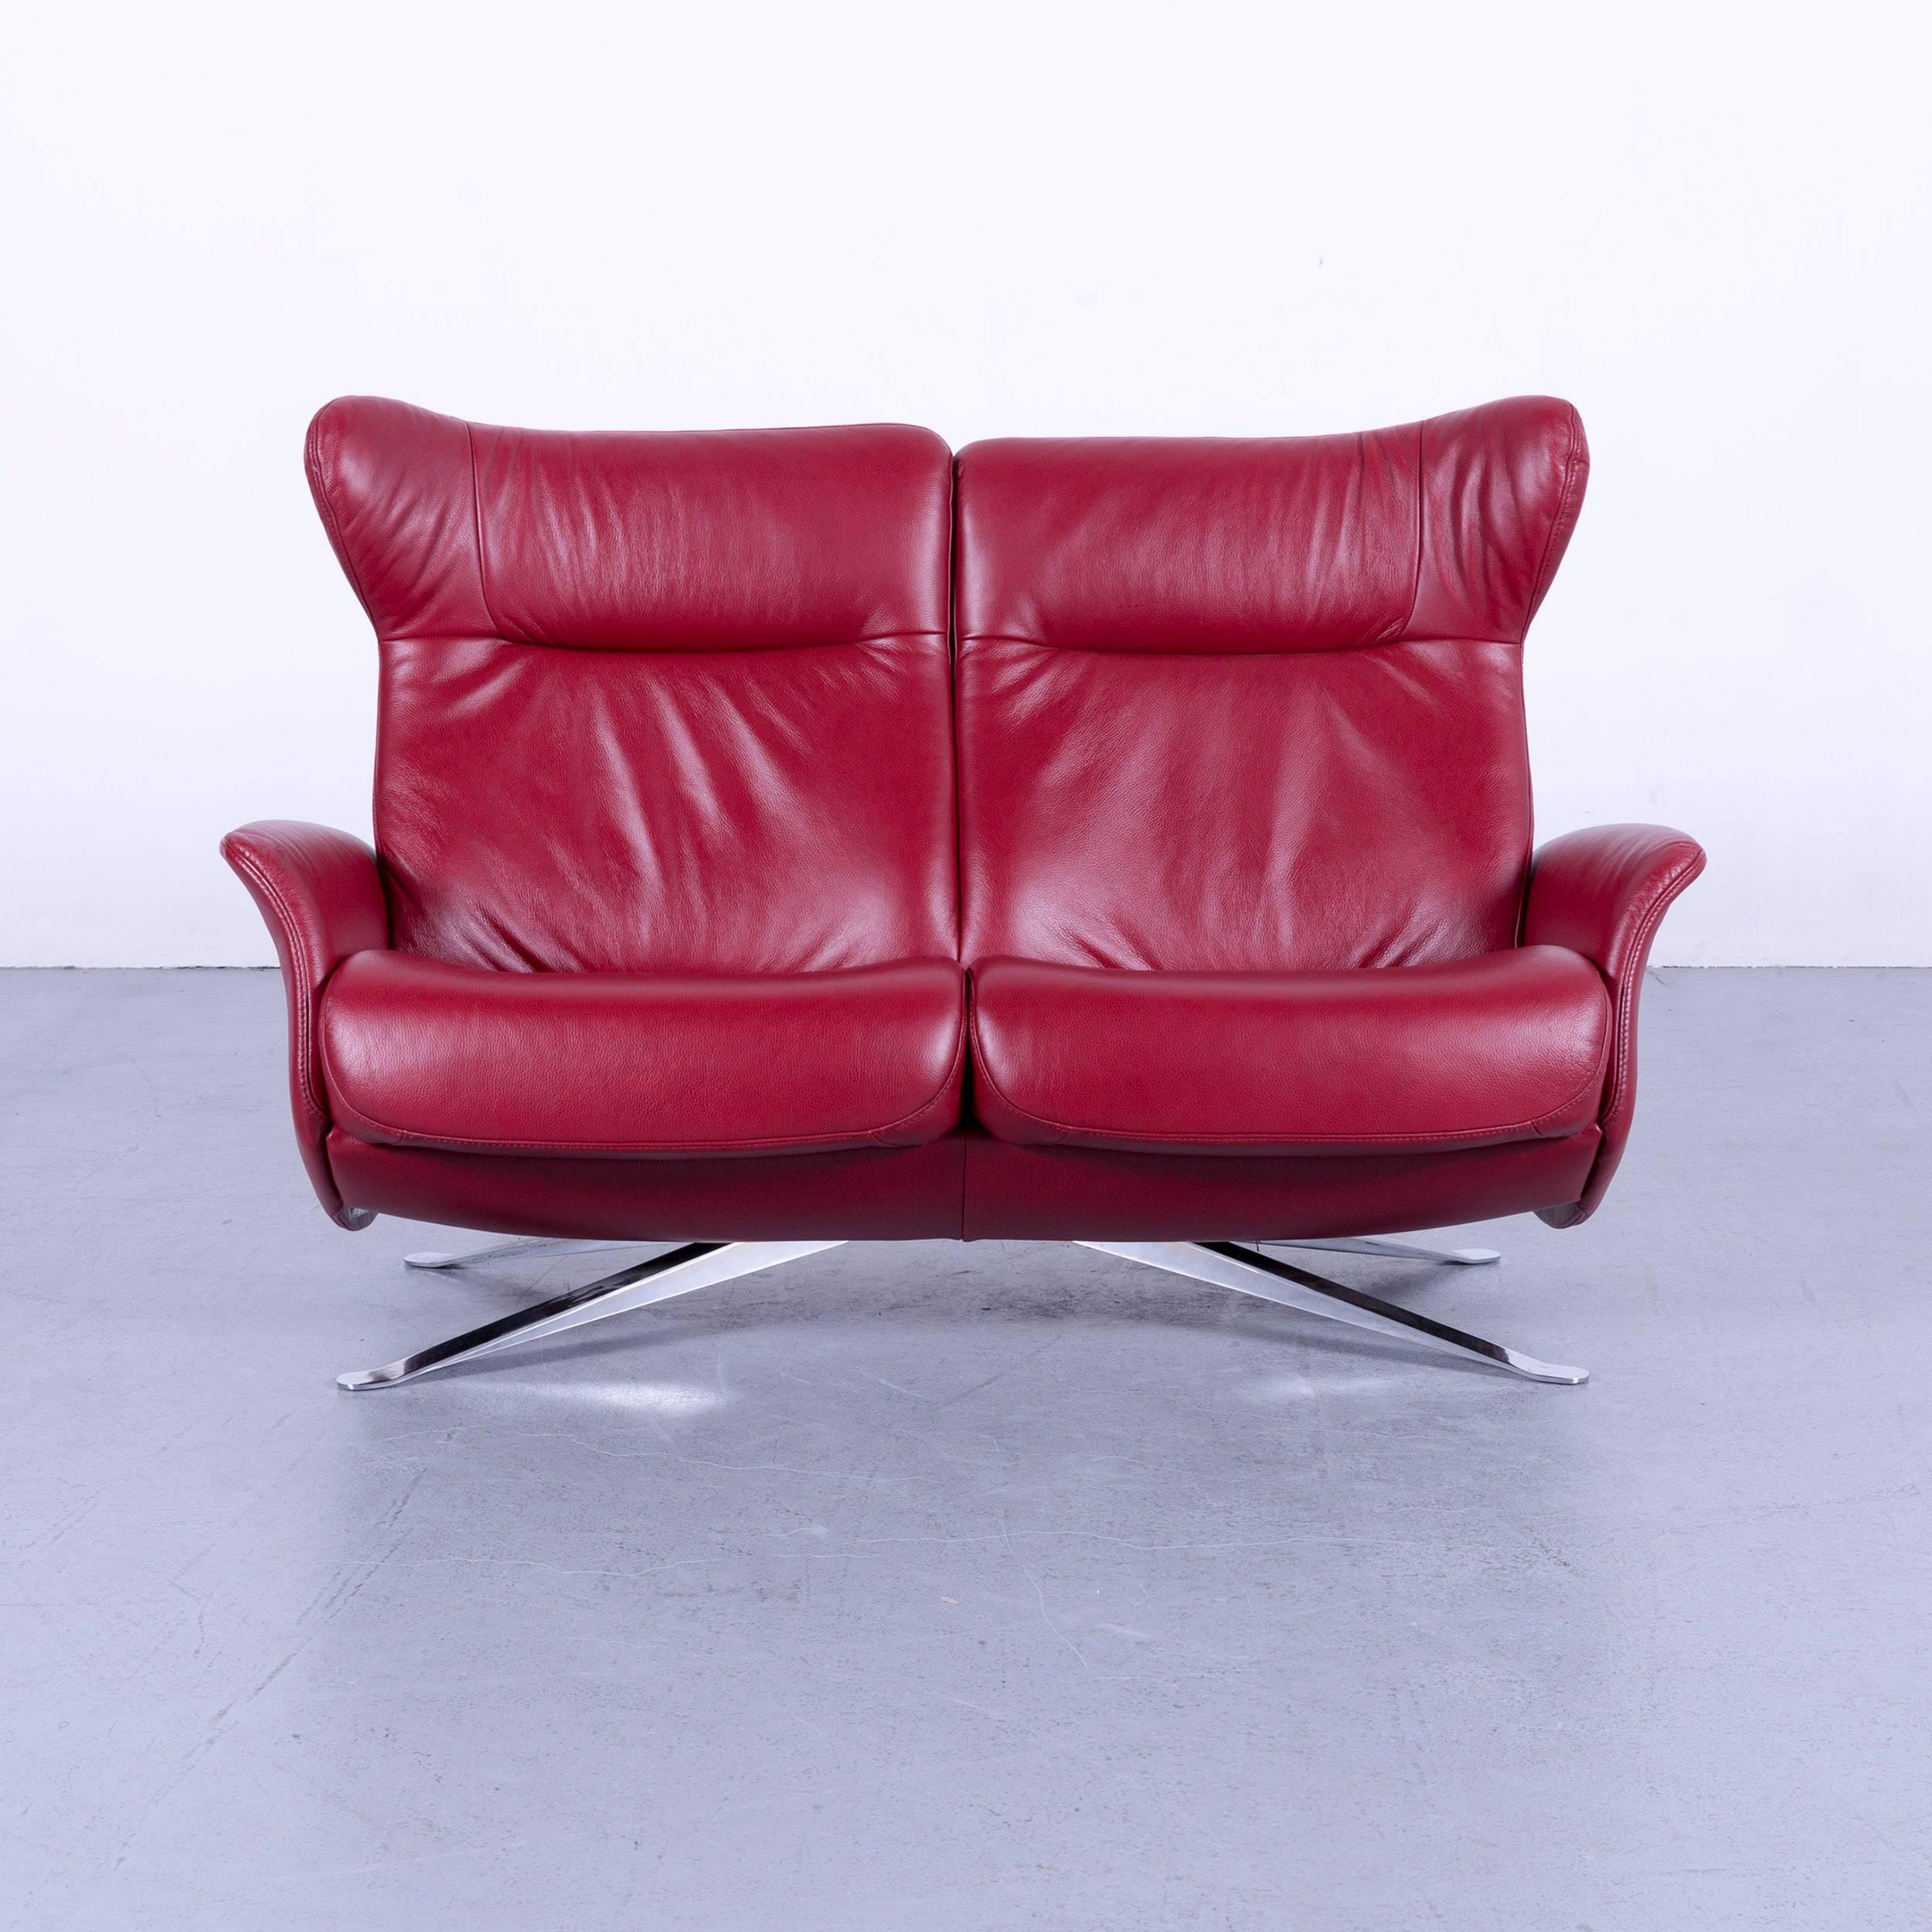 German Joop, Leather Sofa Red Two-Seat Recliner